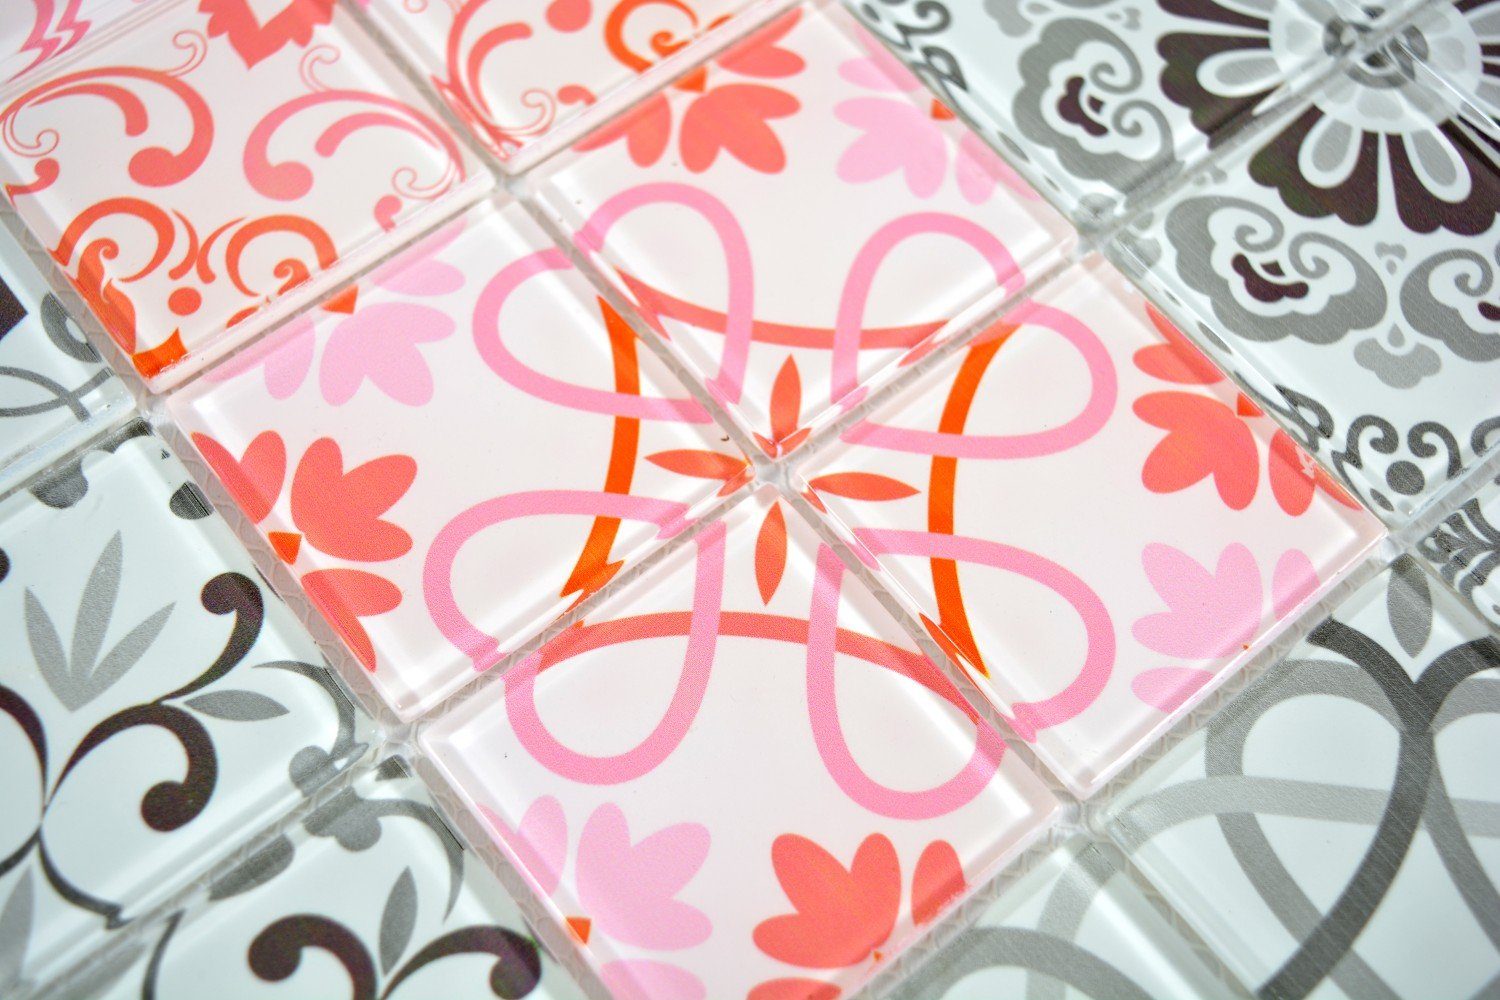 Wandfliese Glasmosaik Mosani rot Dekorative Küchenwand, Mosaikfliesen Wandverkleidung Retro grau